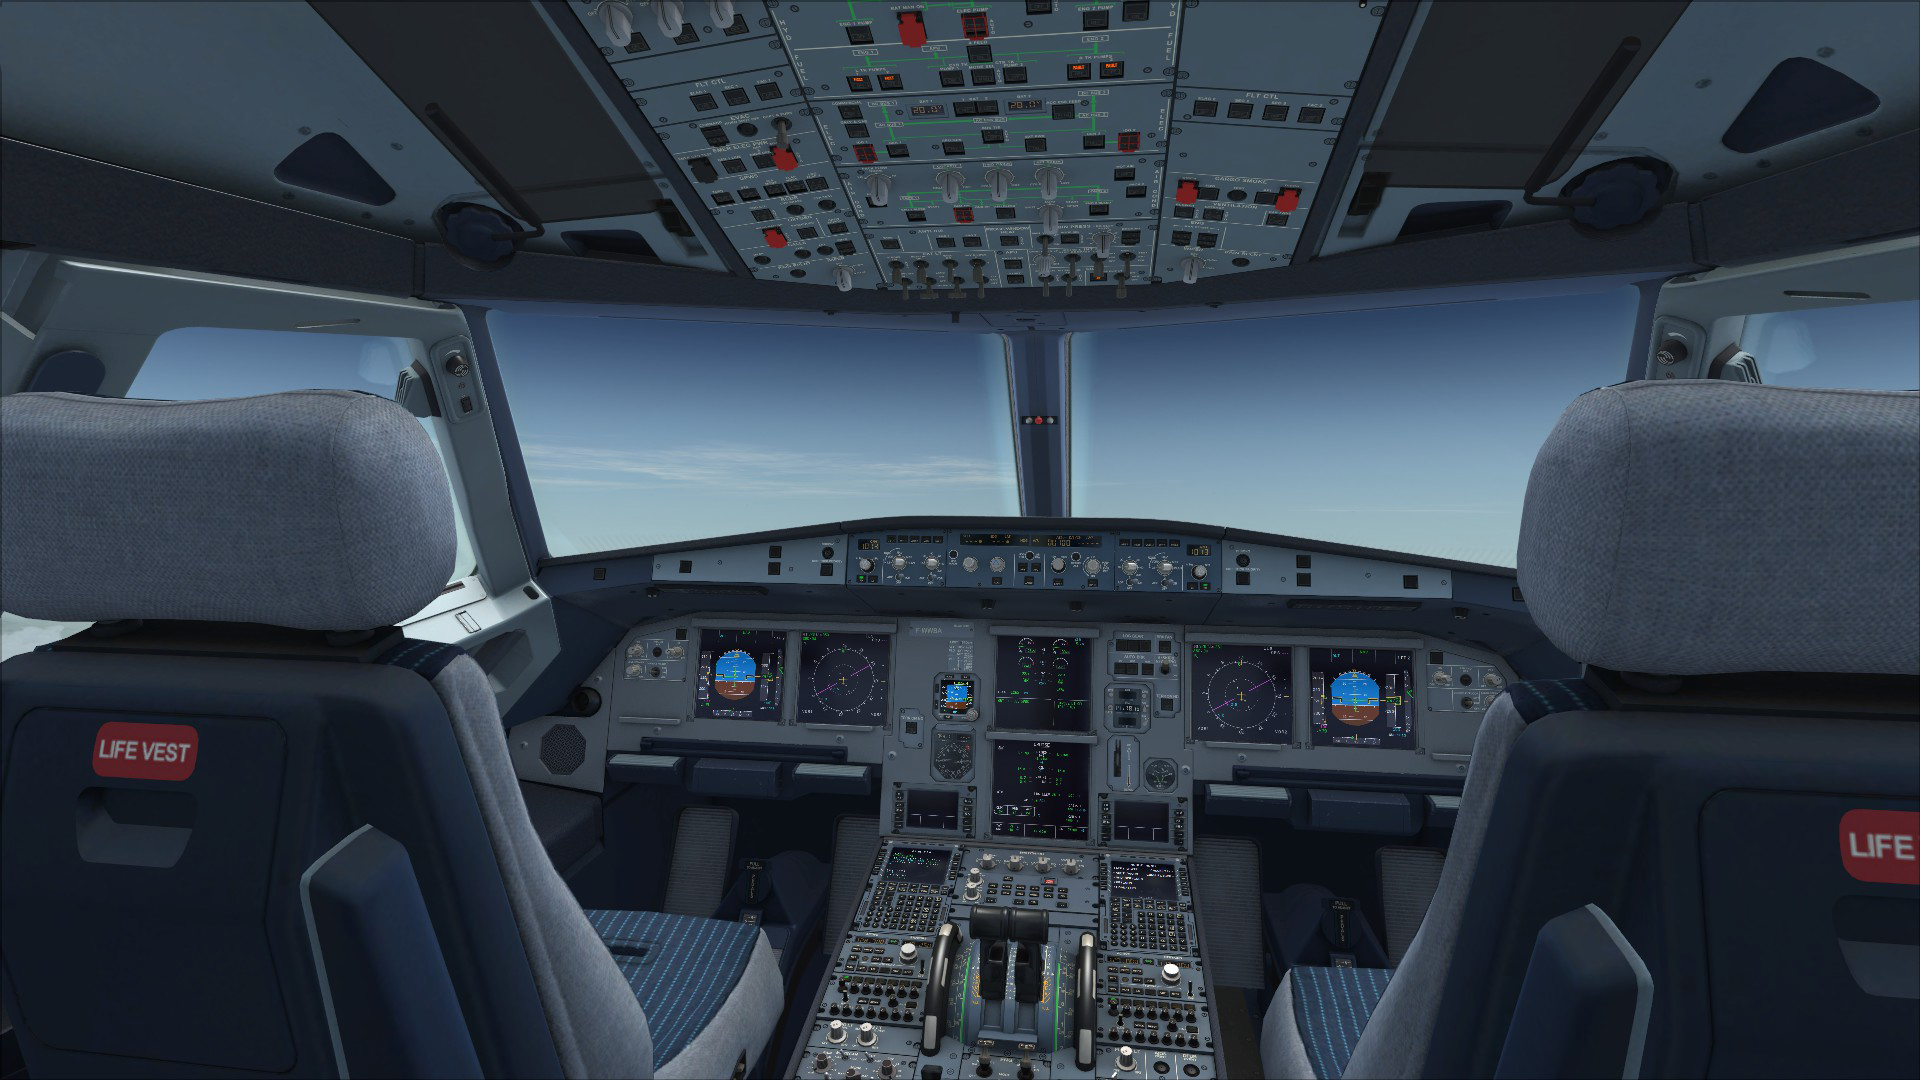 aerosoft airbus x extended hd cockpit